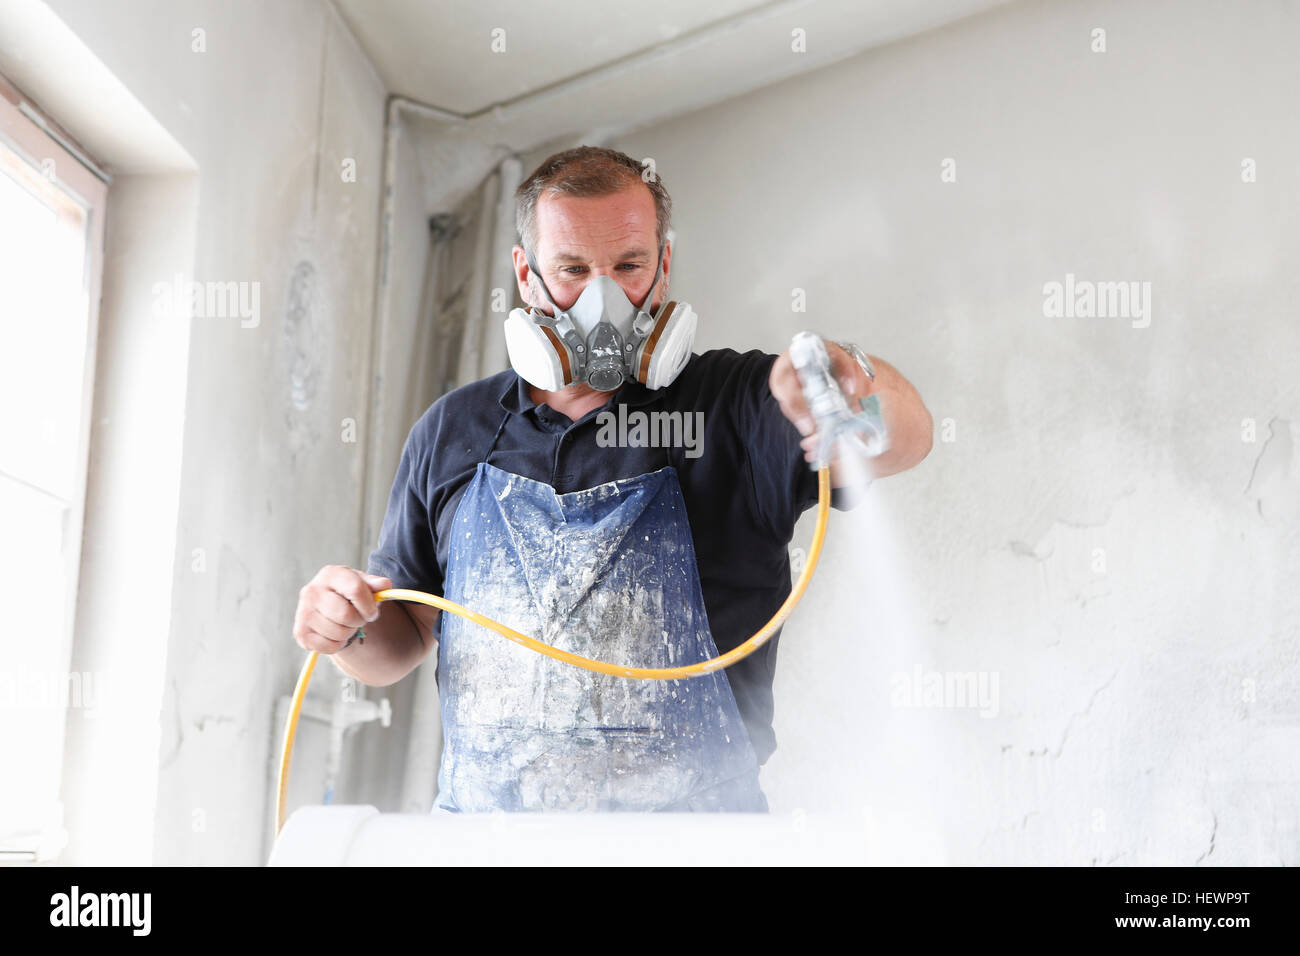 Mann trägt Schutzmaske Spray Malerei Holz Stockfotografie - Alamy